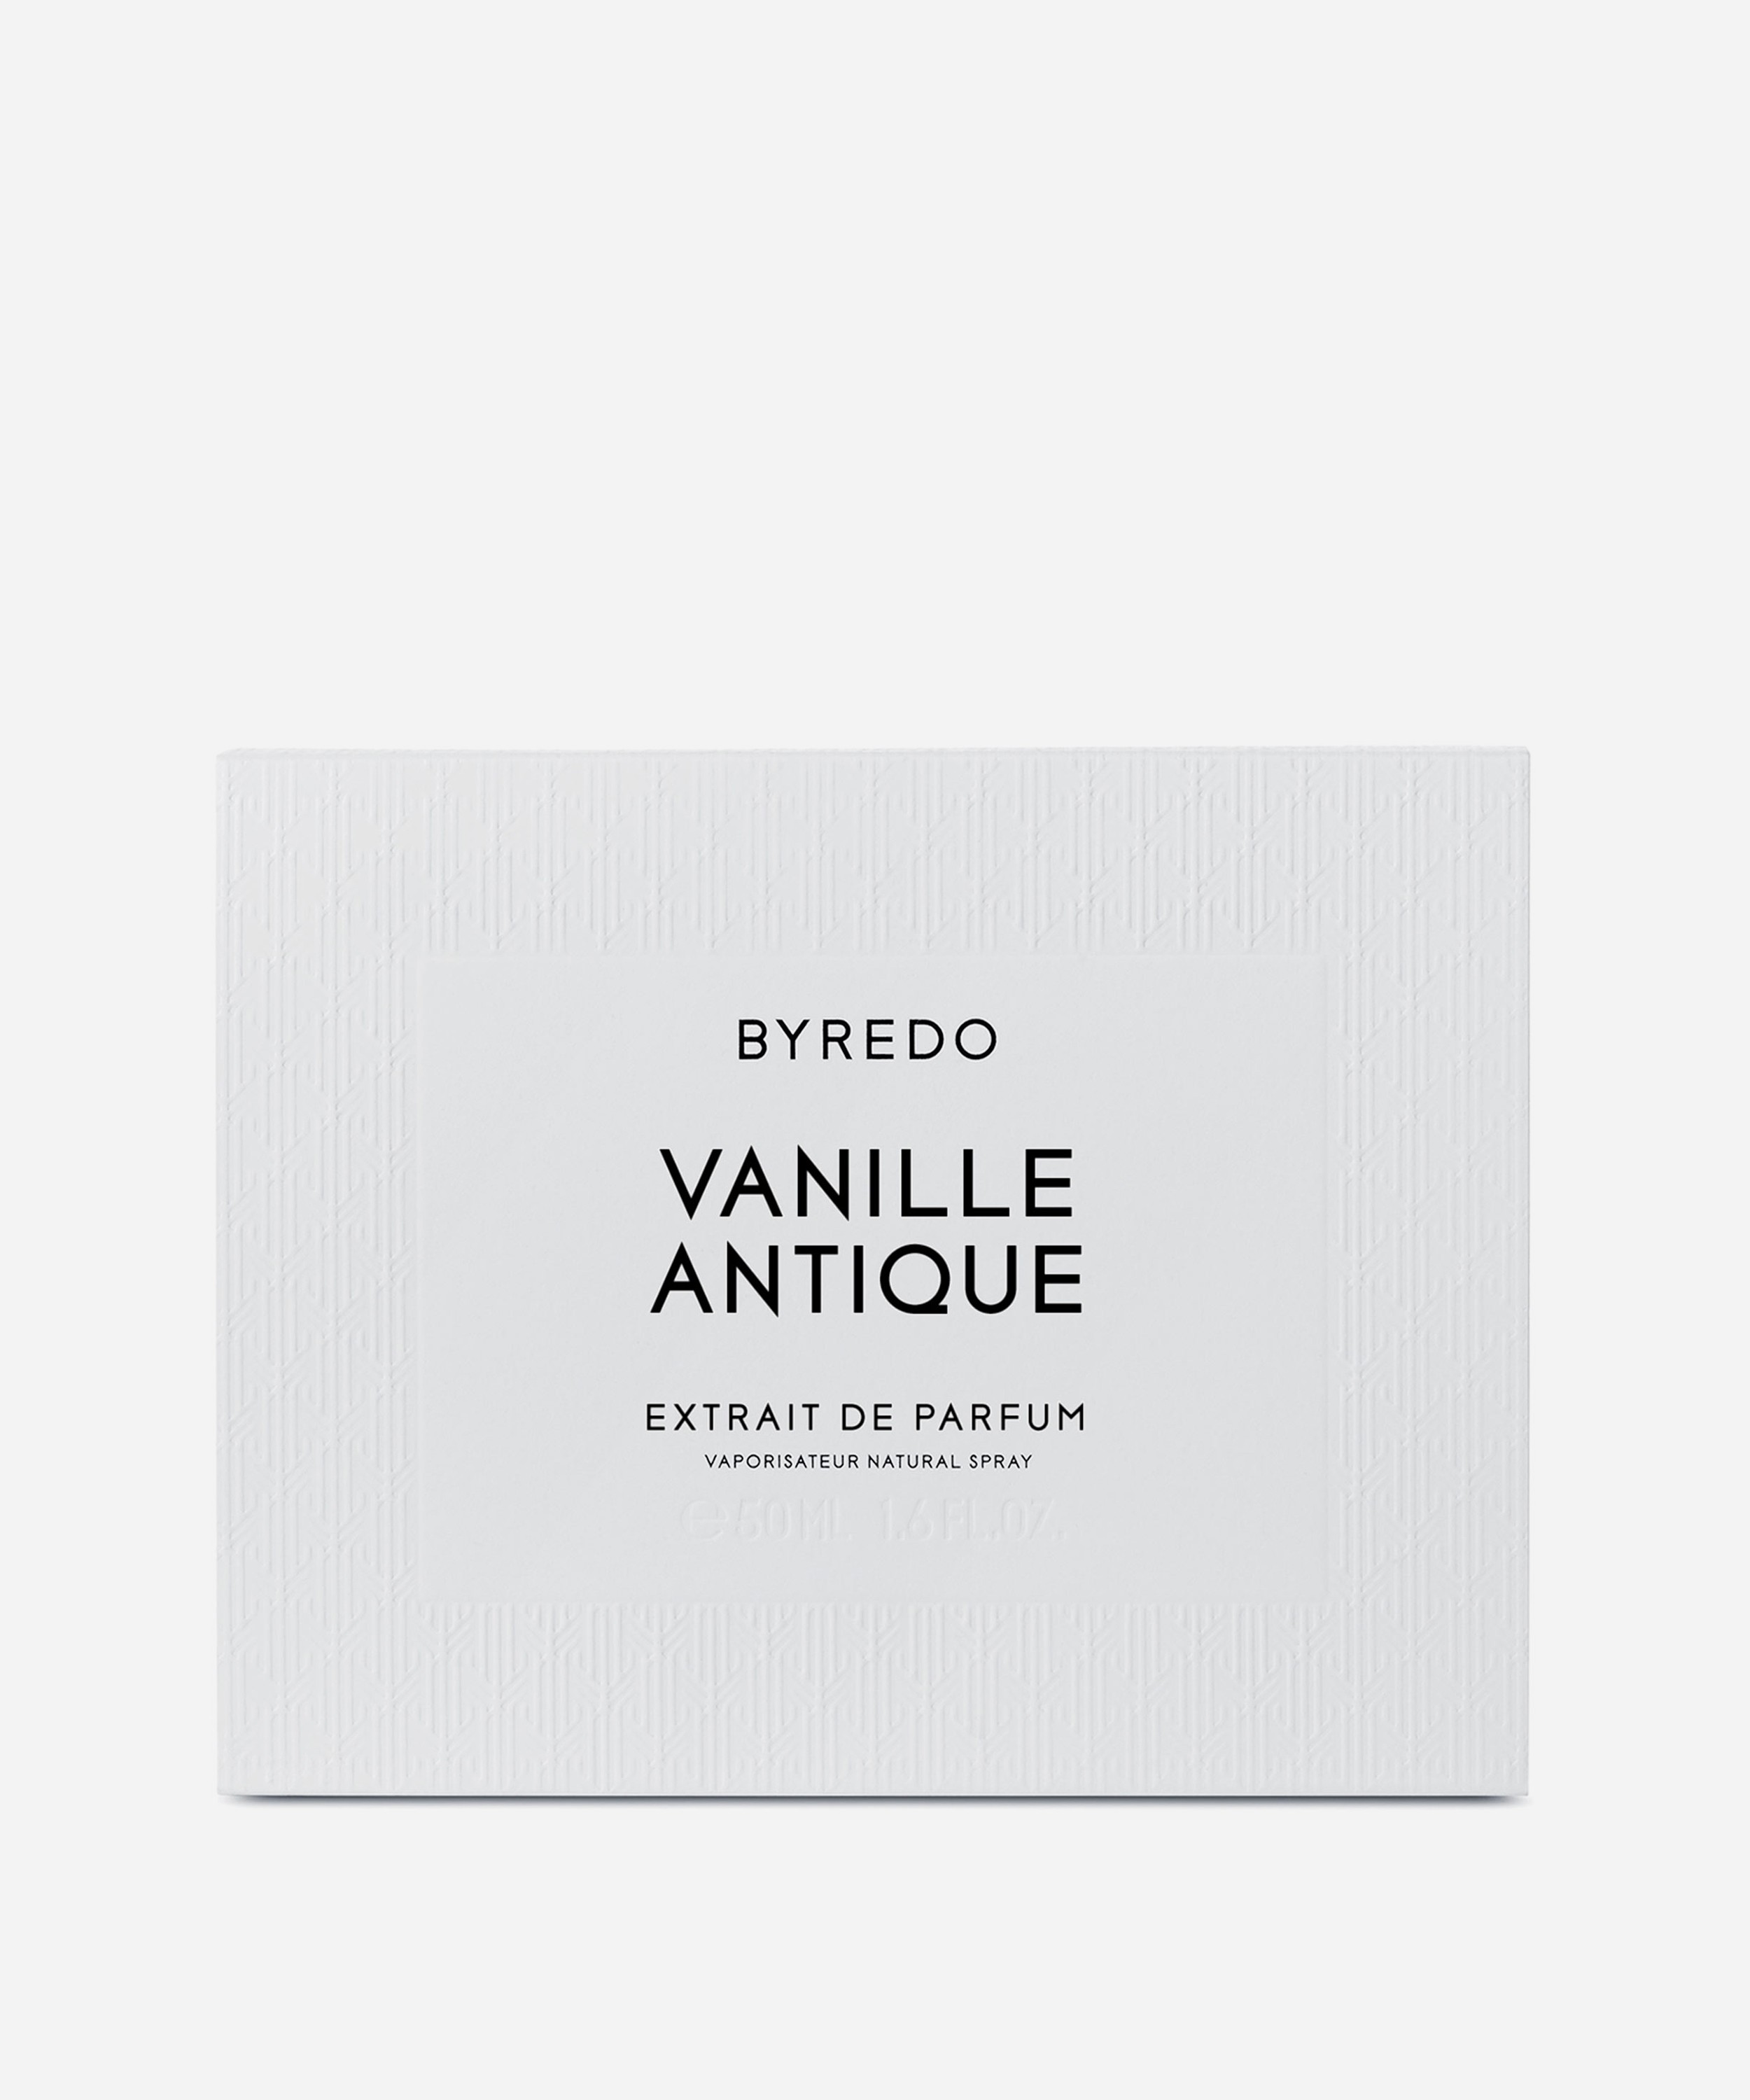 Byredo Vanille Antique Extrait de Parfum 50ml | Liberty